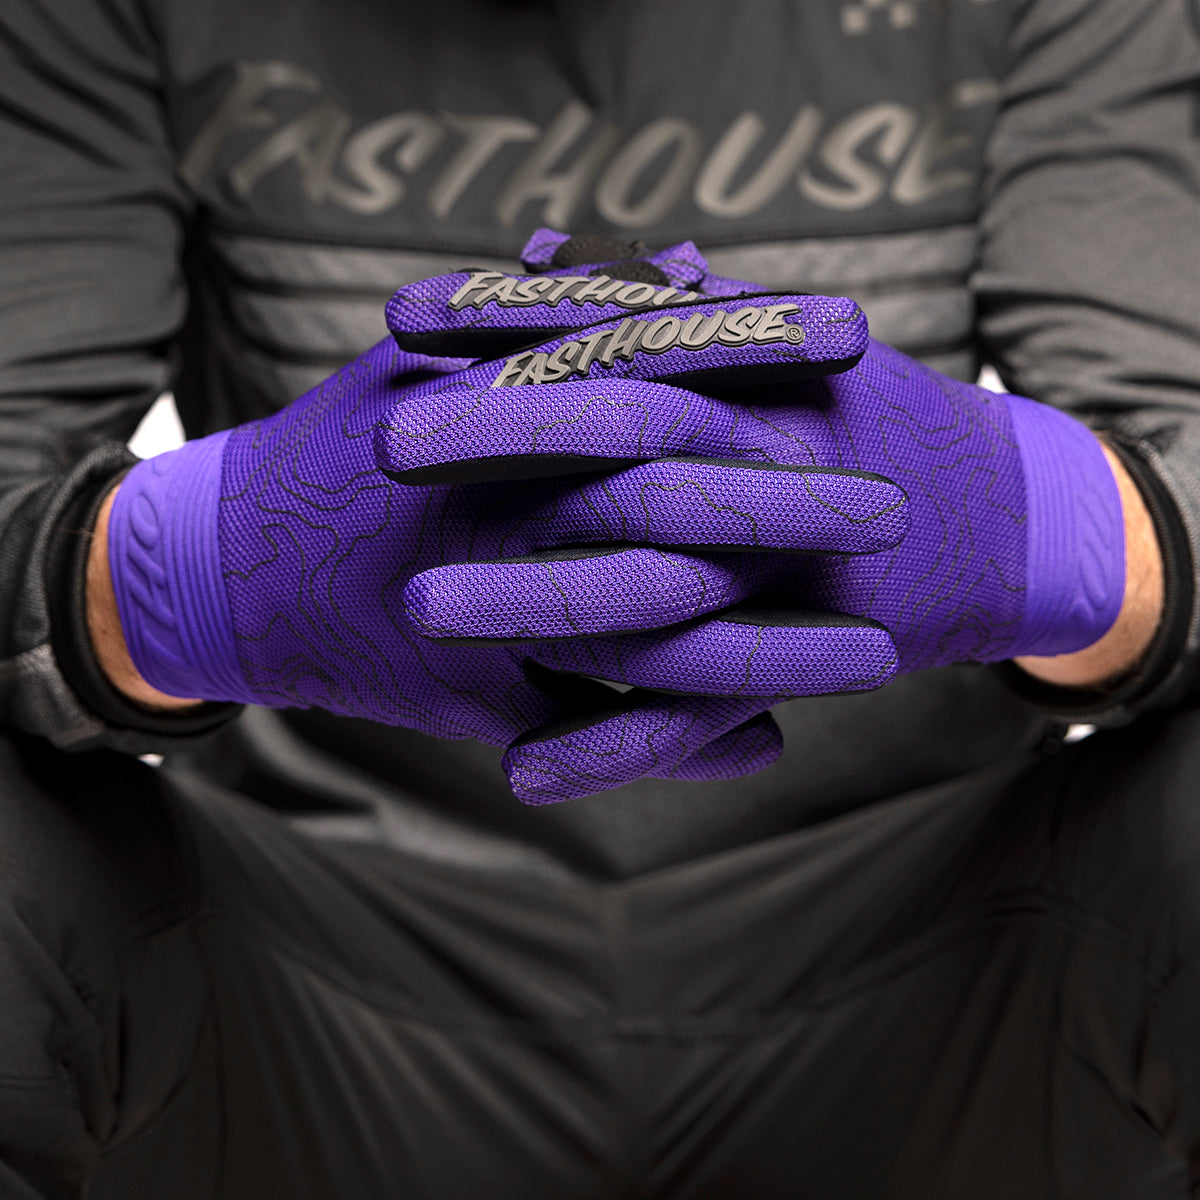 Blitz Swift Glove - Purple